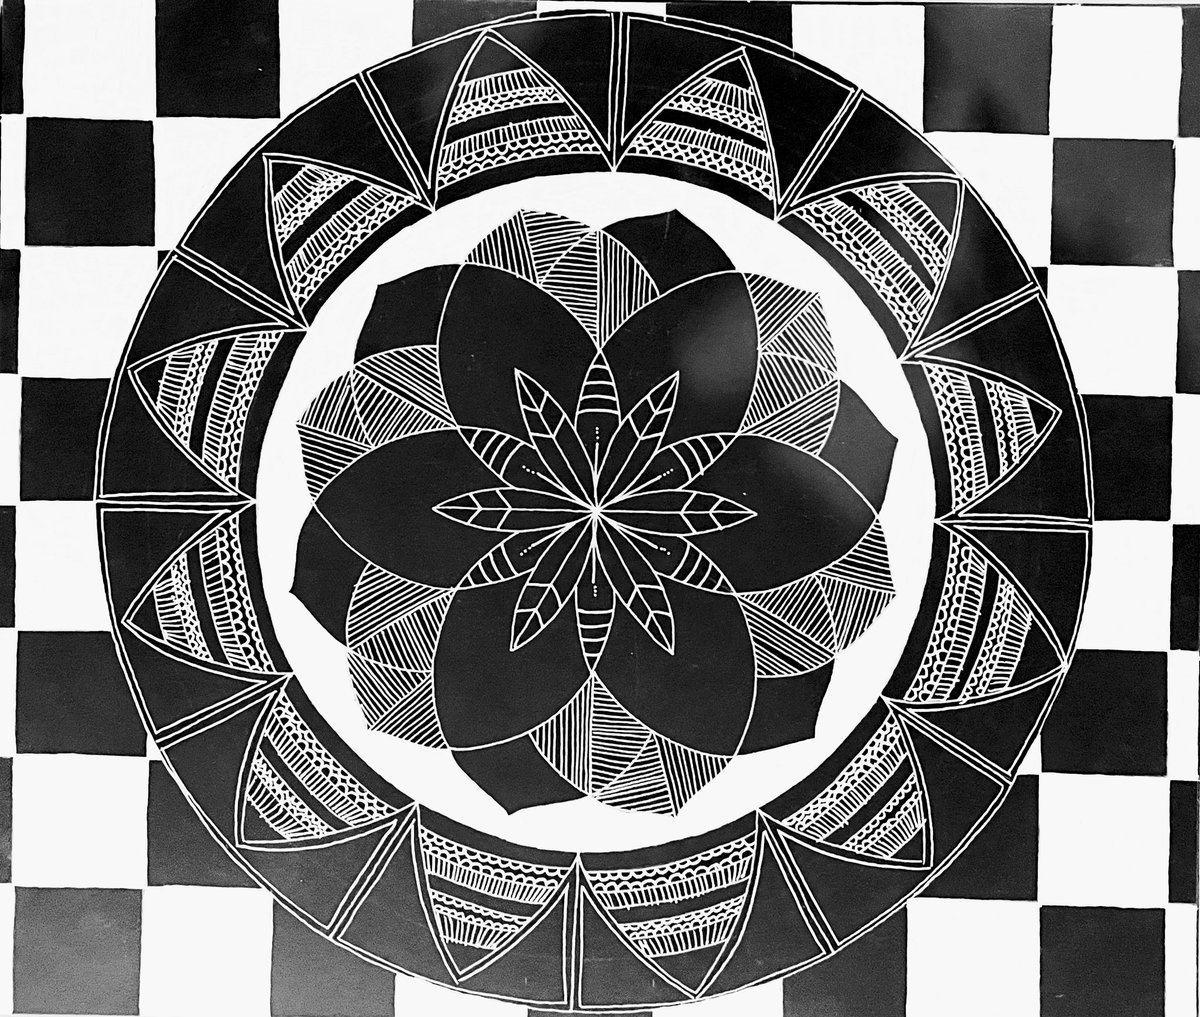 New piece

#art #mandala #sacredgeometry #handdrawn #sketch #penandpaper #doodle #artist #ArtistOnTwitter #inverted #blackandwhite #floweroflife #seedoflife #SPIRITUAL